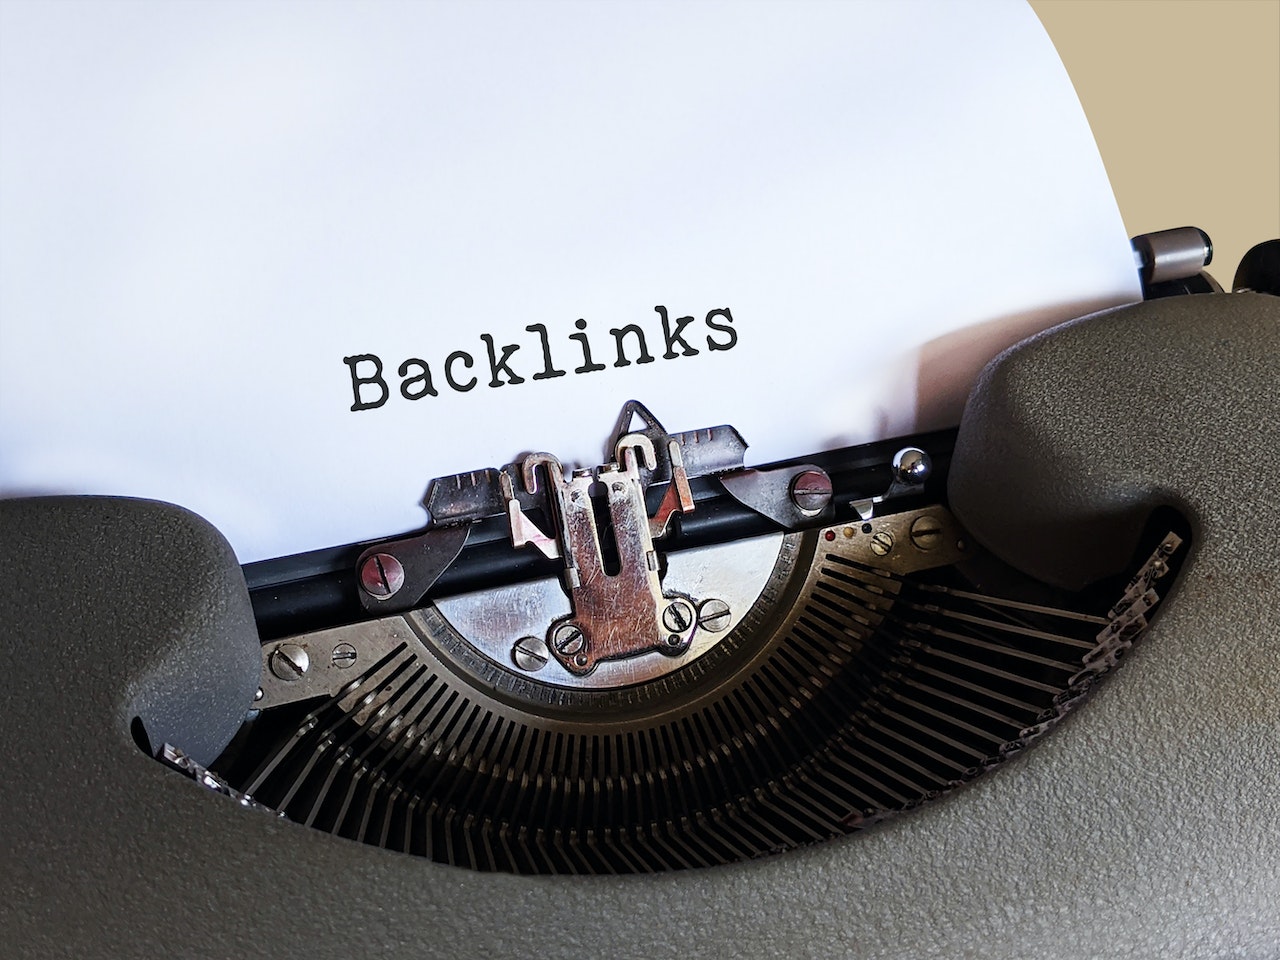 backlinks auf dem papier